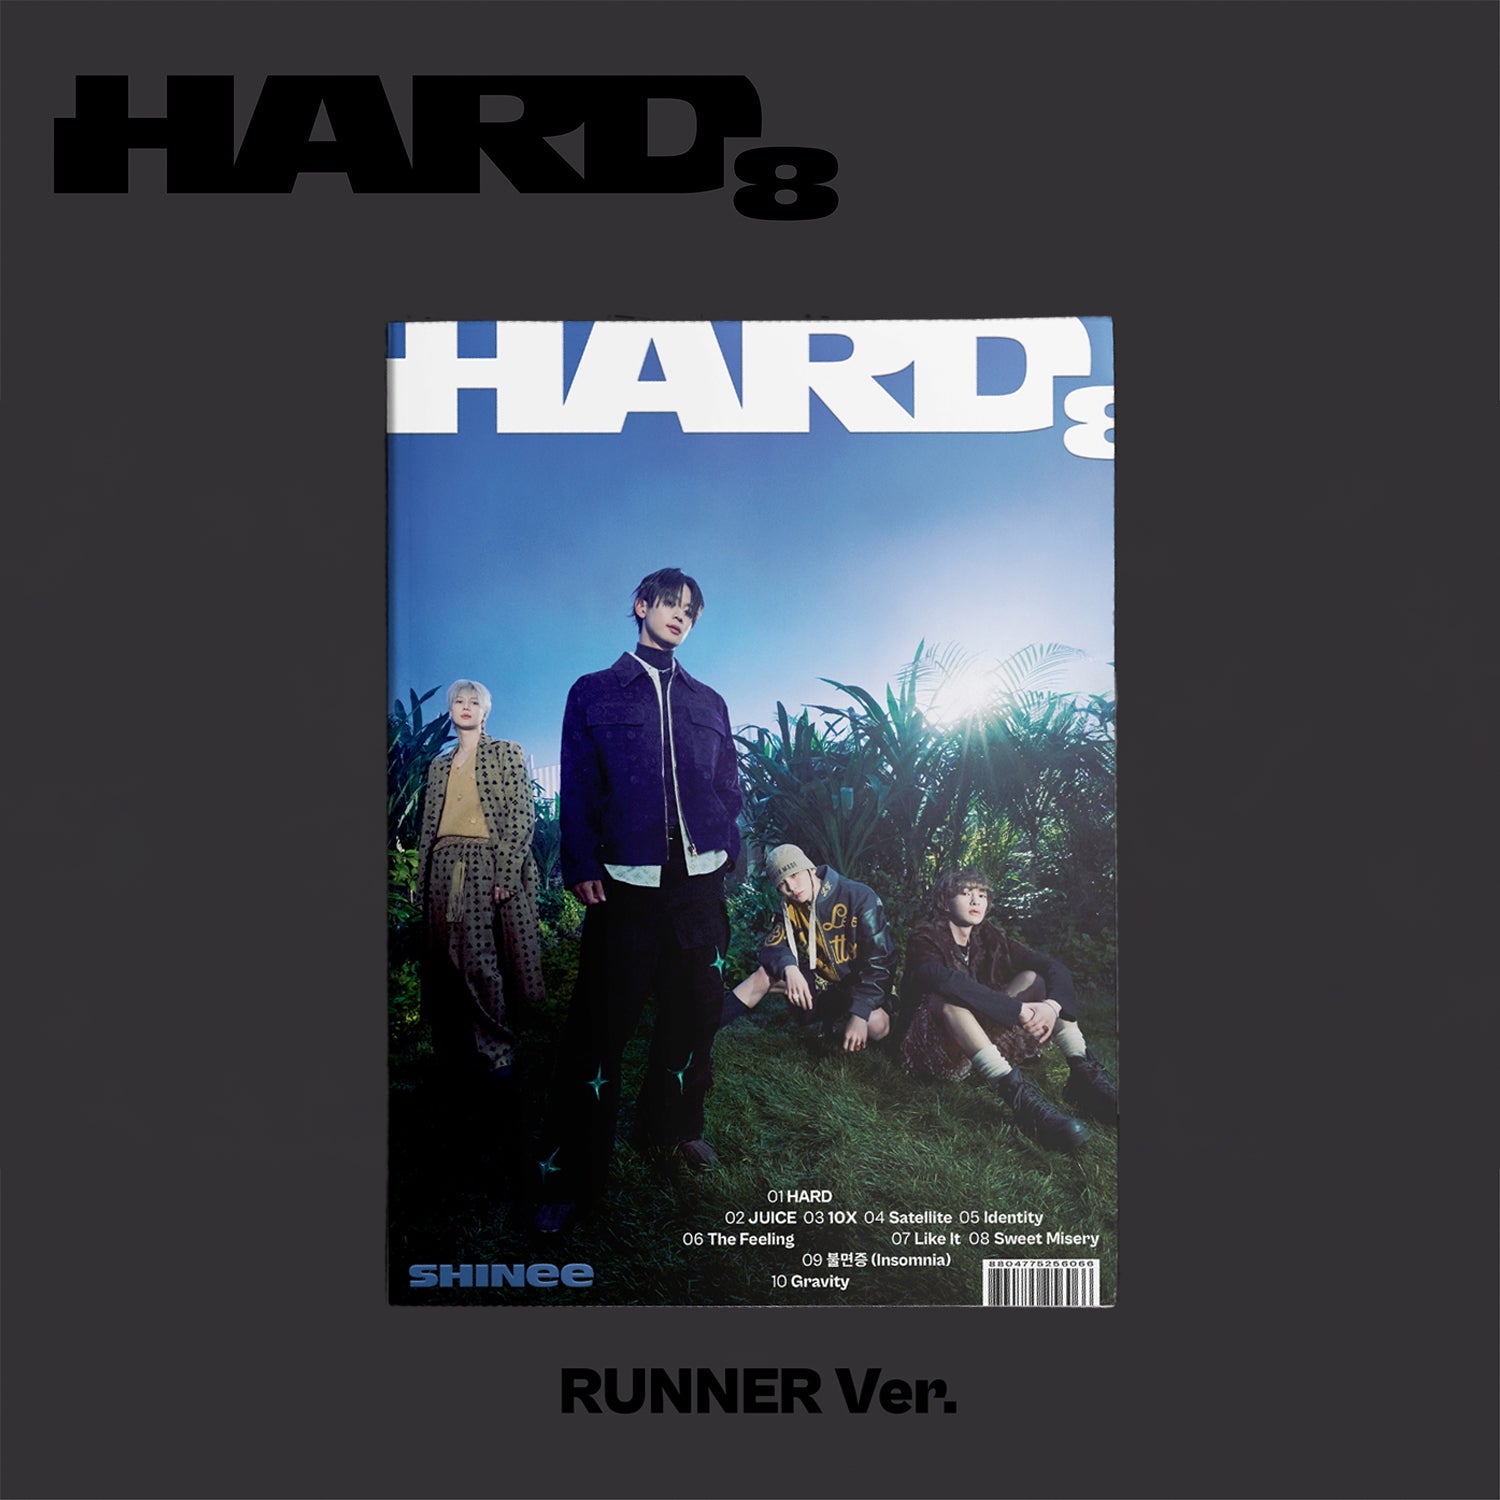 SHINEE 8TH ALBUM 'HARD' (PHOTOBOOK) RUNNER VERSION COVER